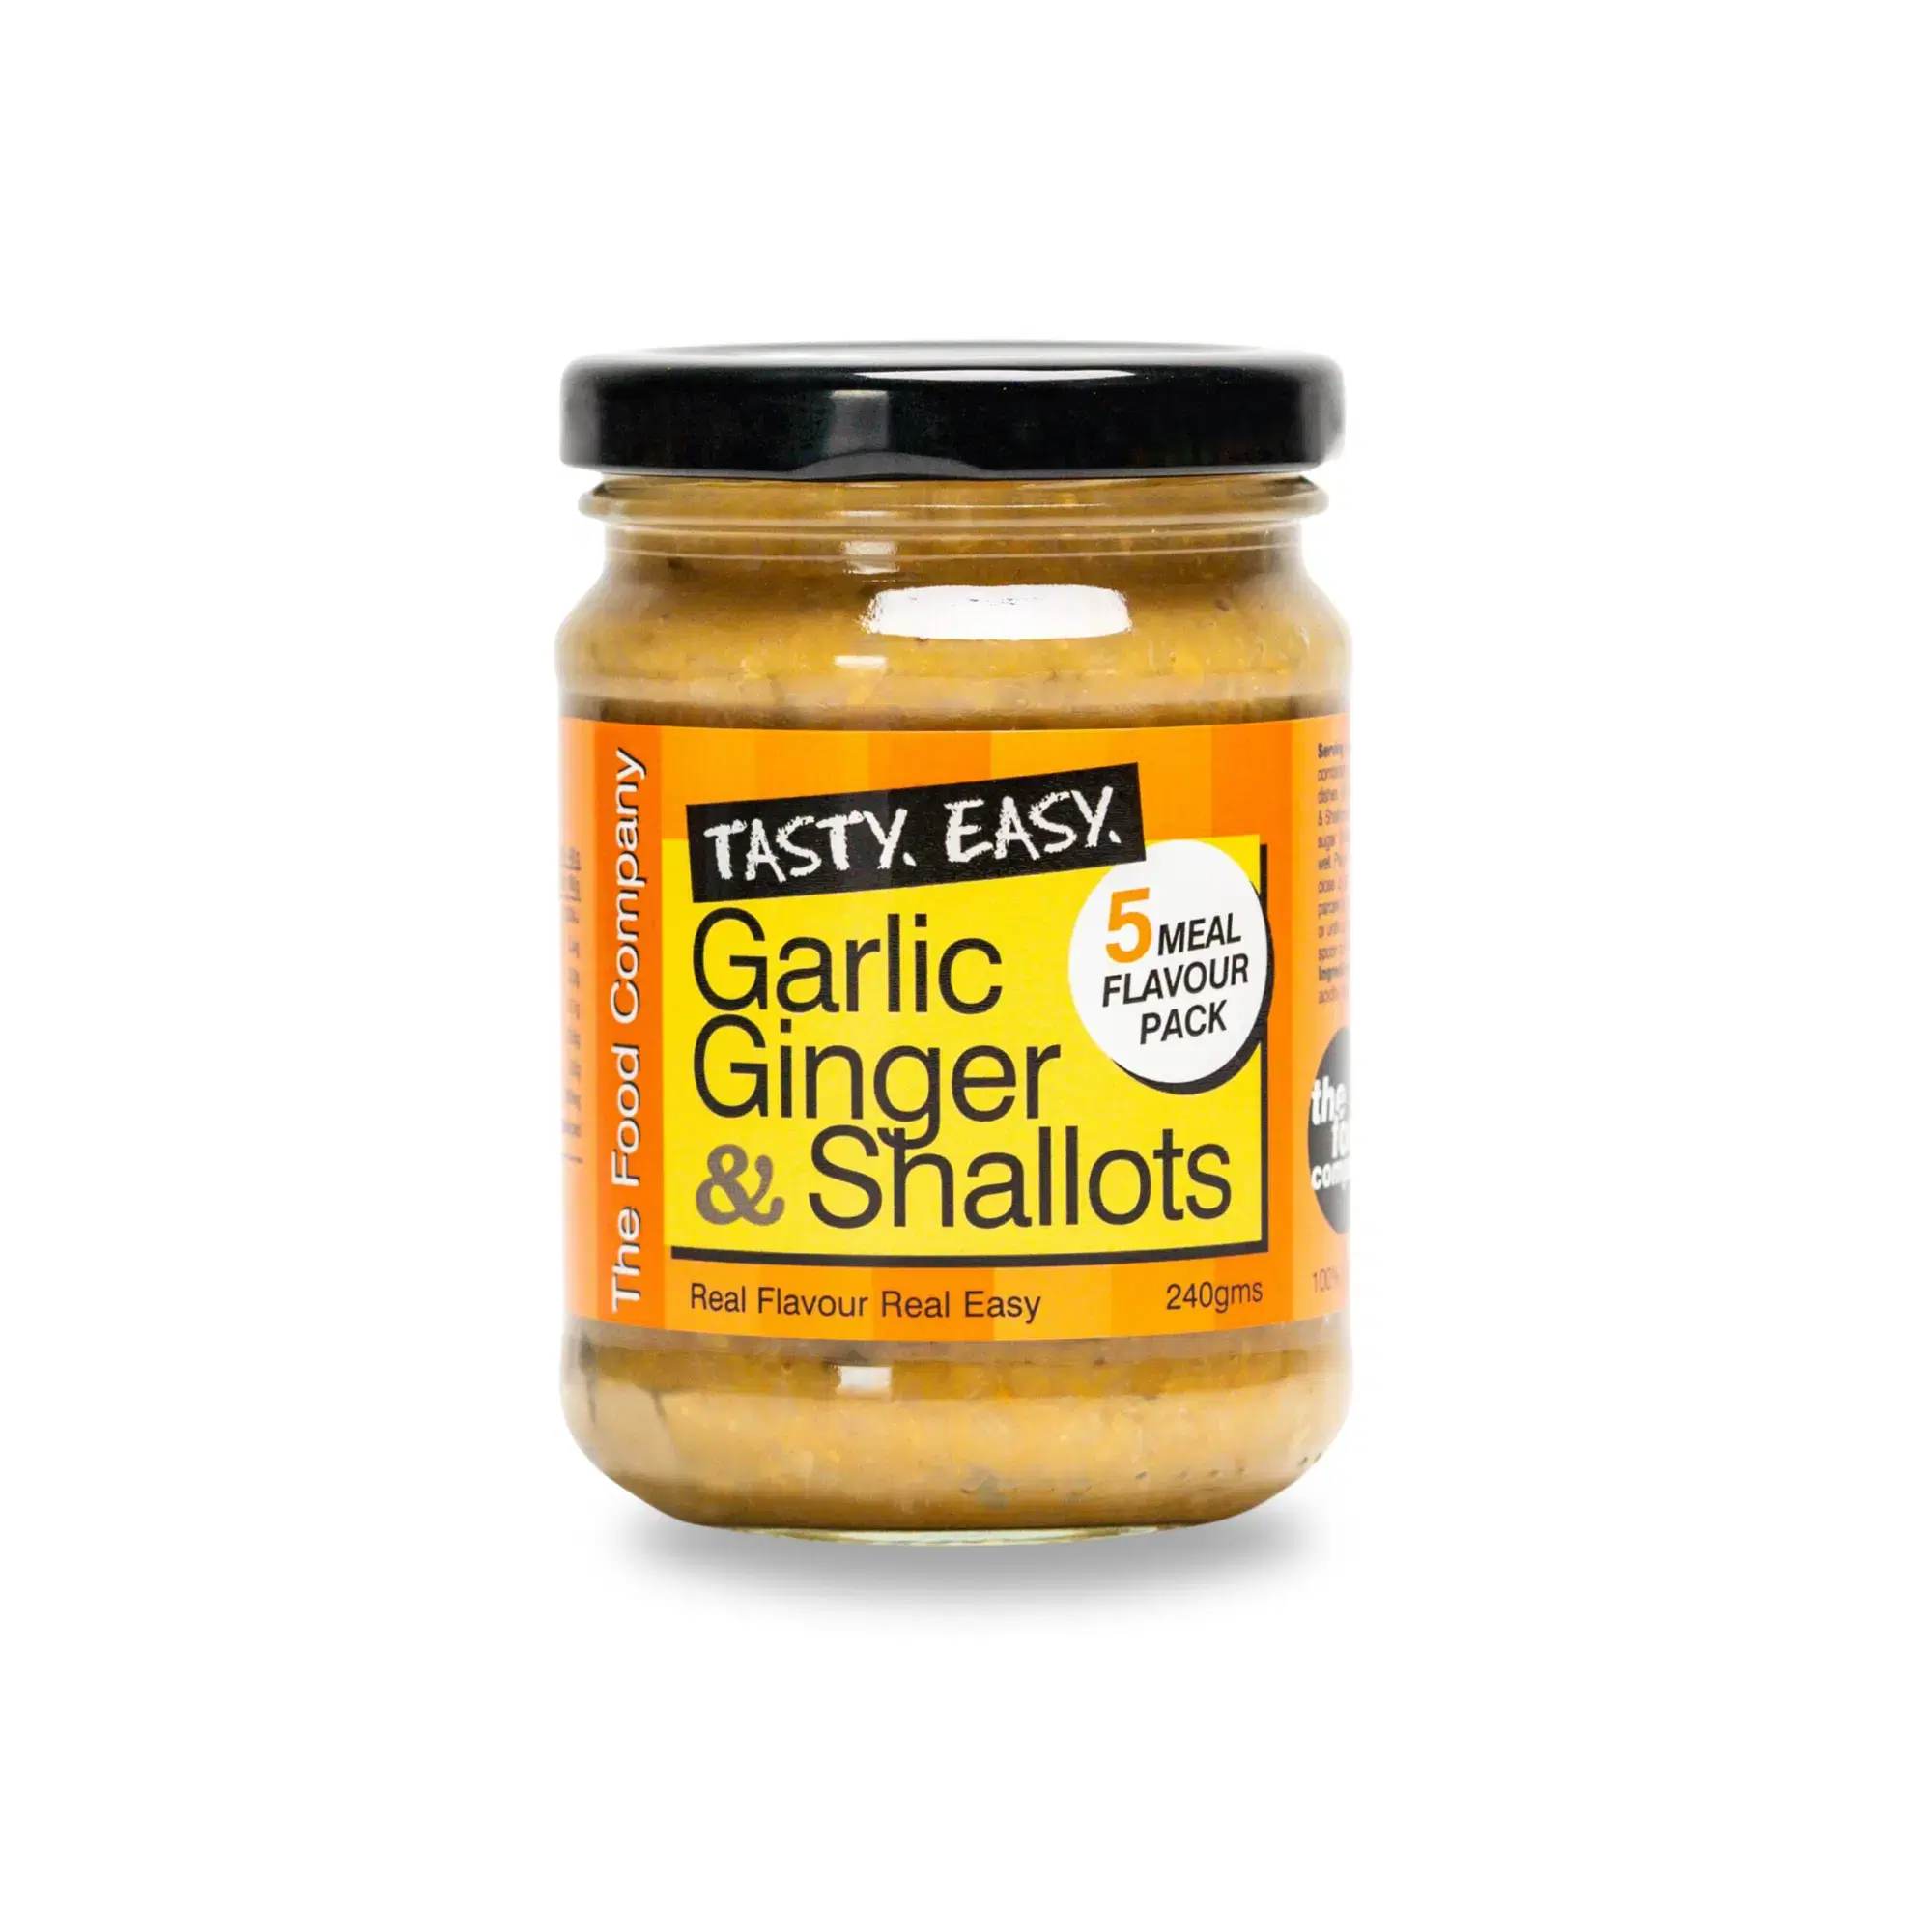 Garlic ginger product